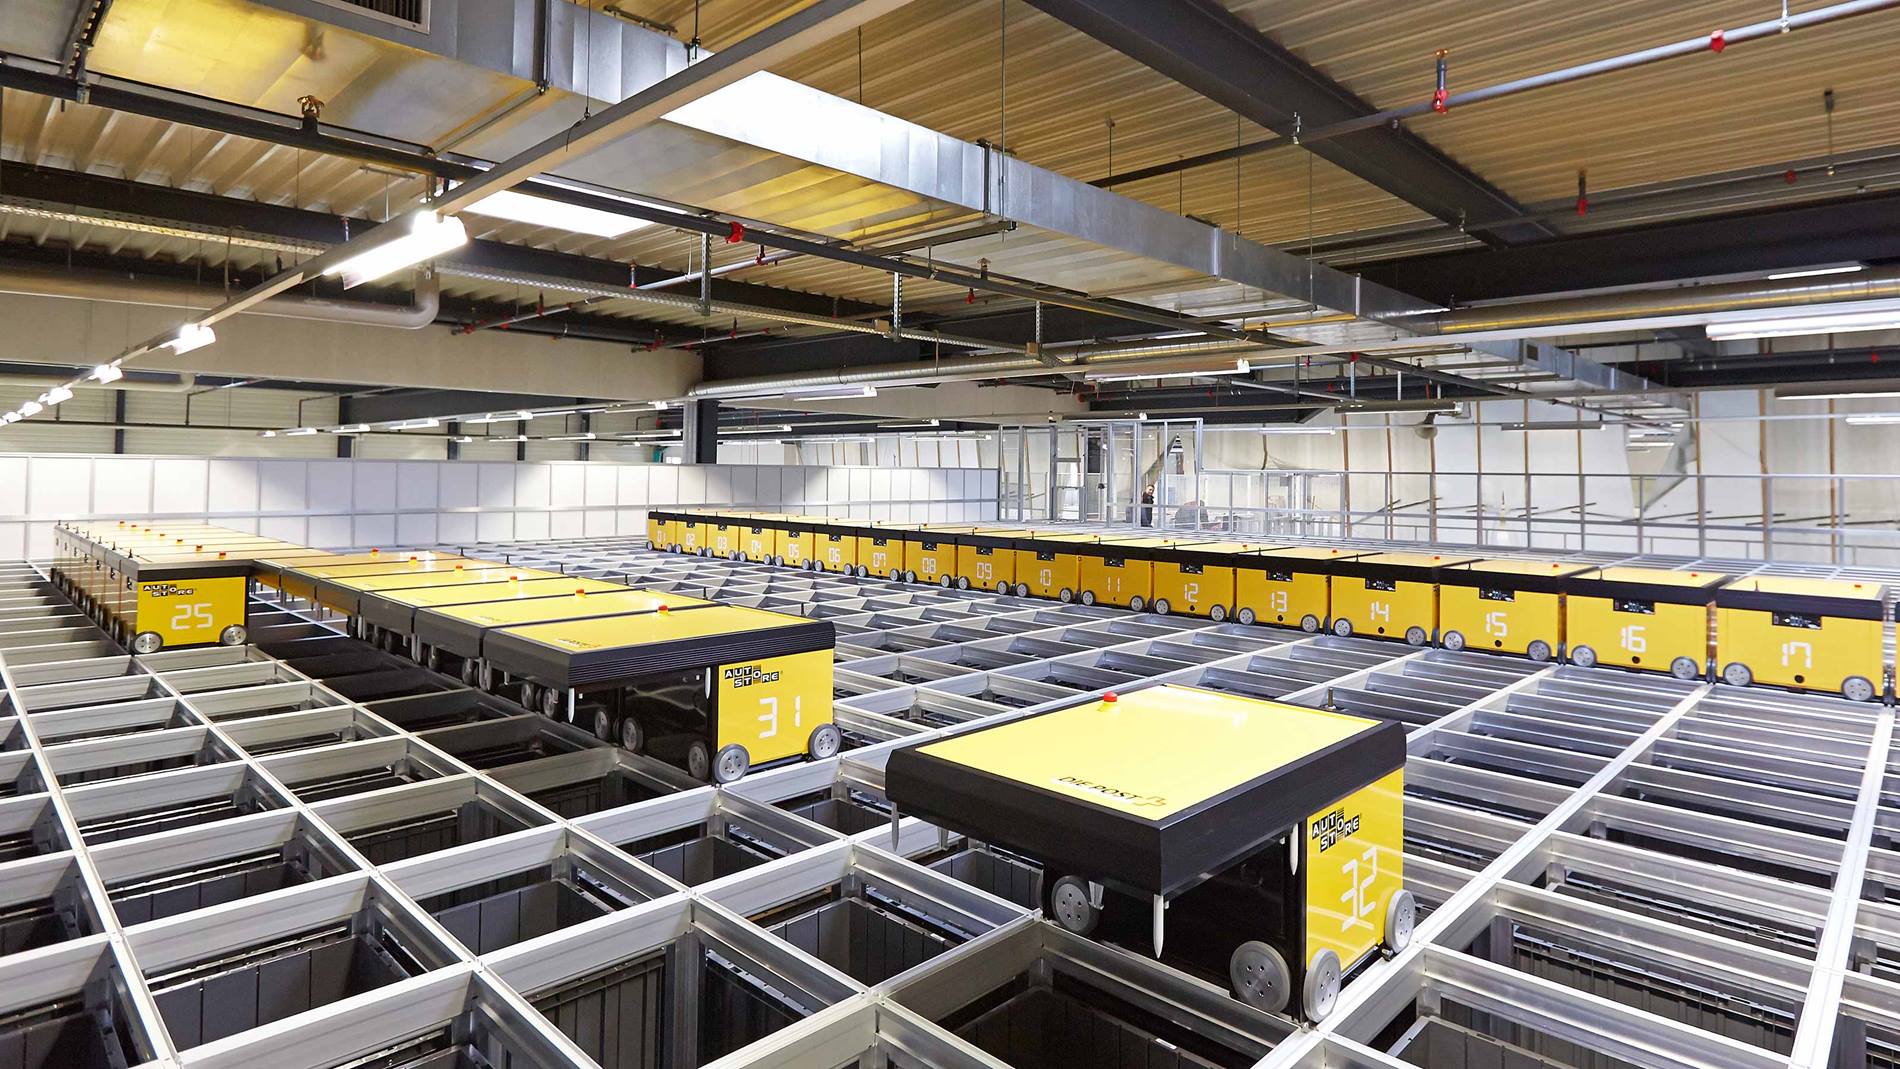 YellowCube AutoStore facility has room for 32,000 bins